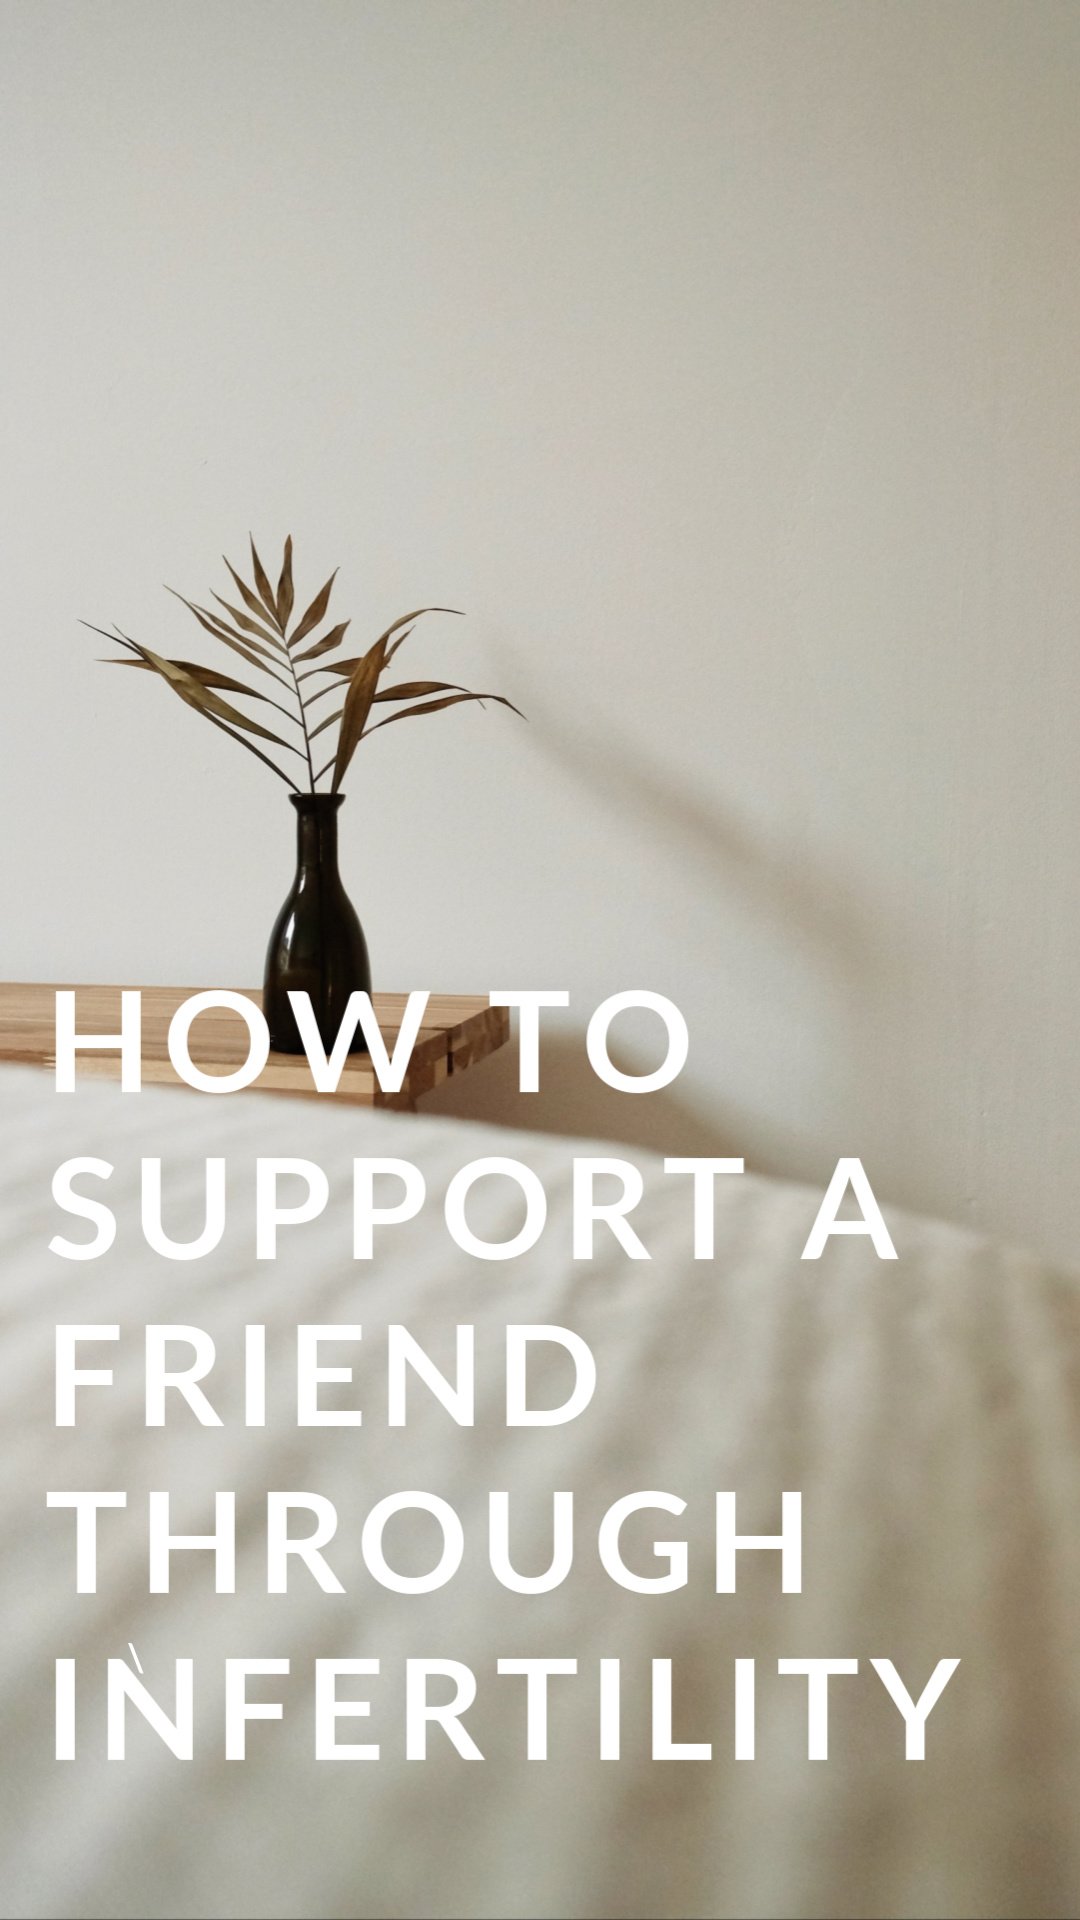 infertility center, how to support a friend through infertility